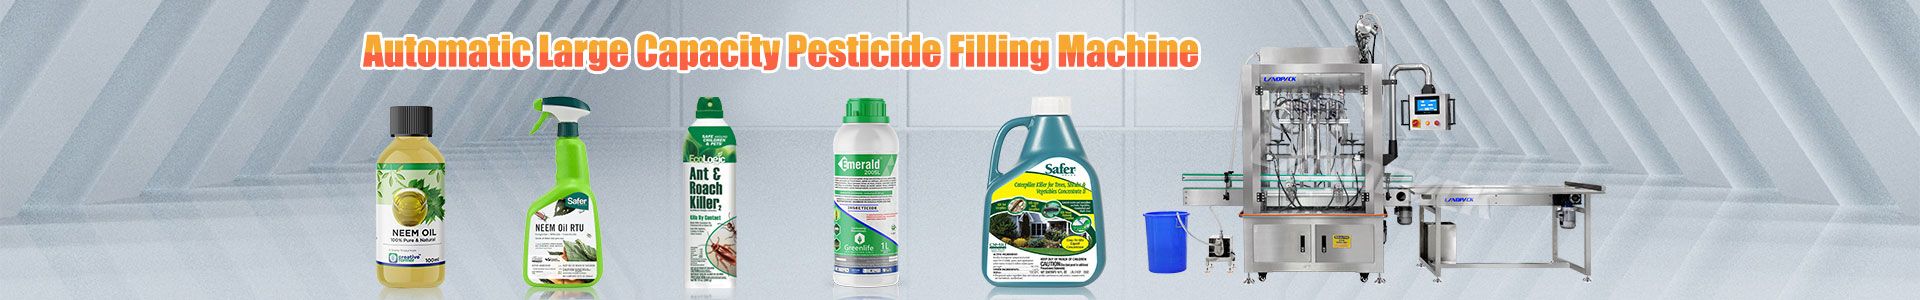 pesticide filling machine